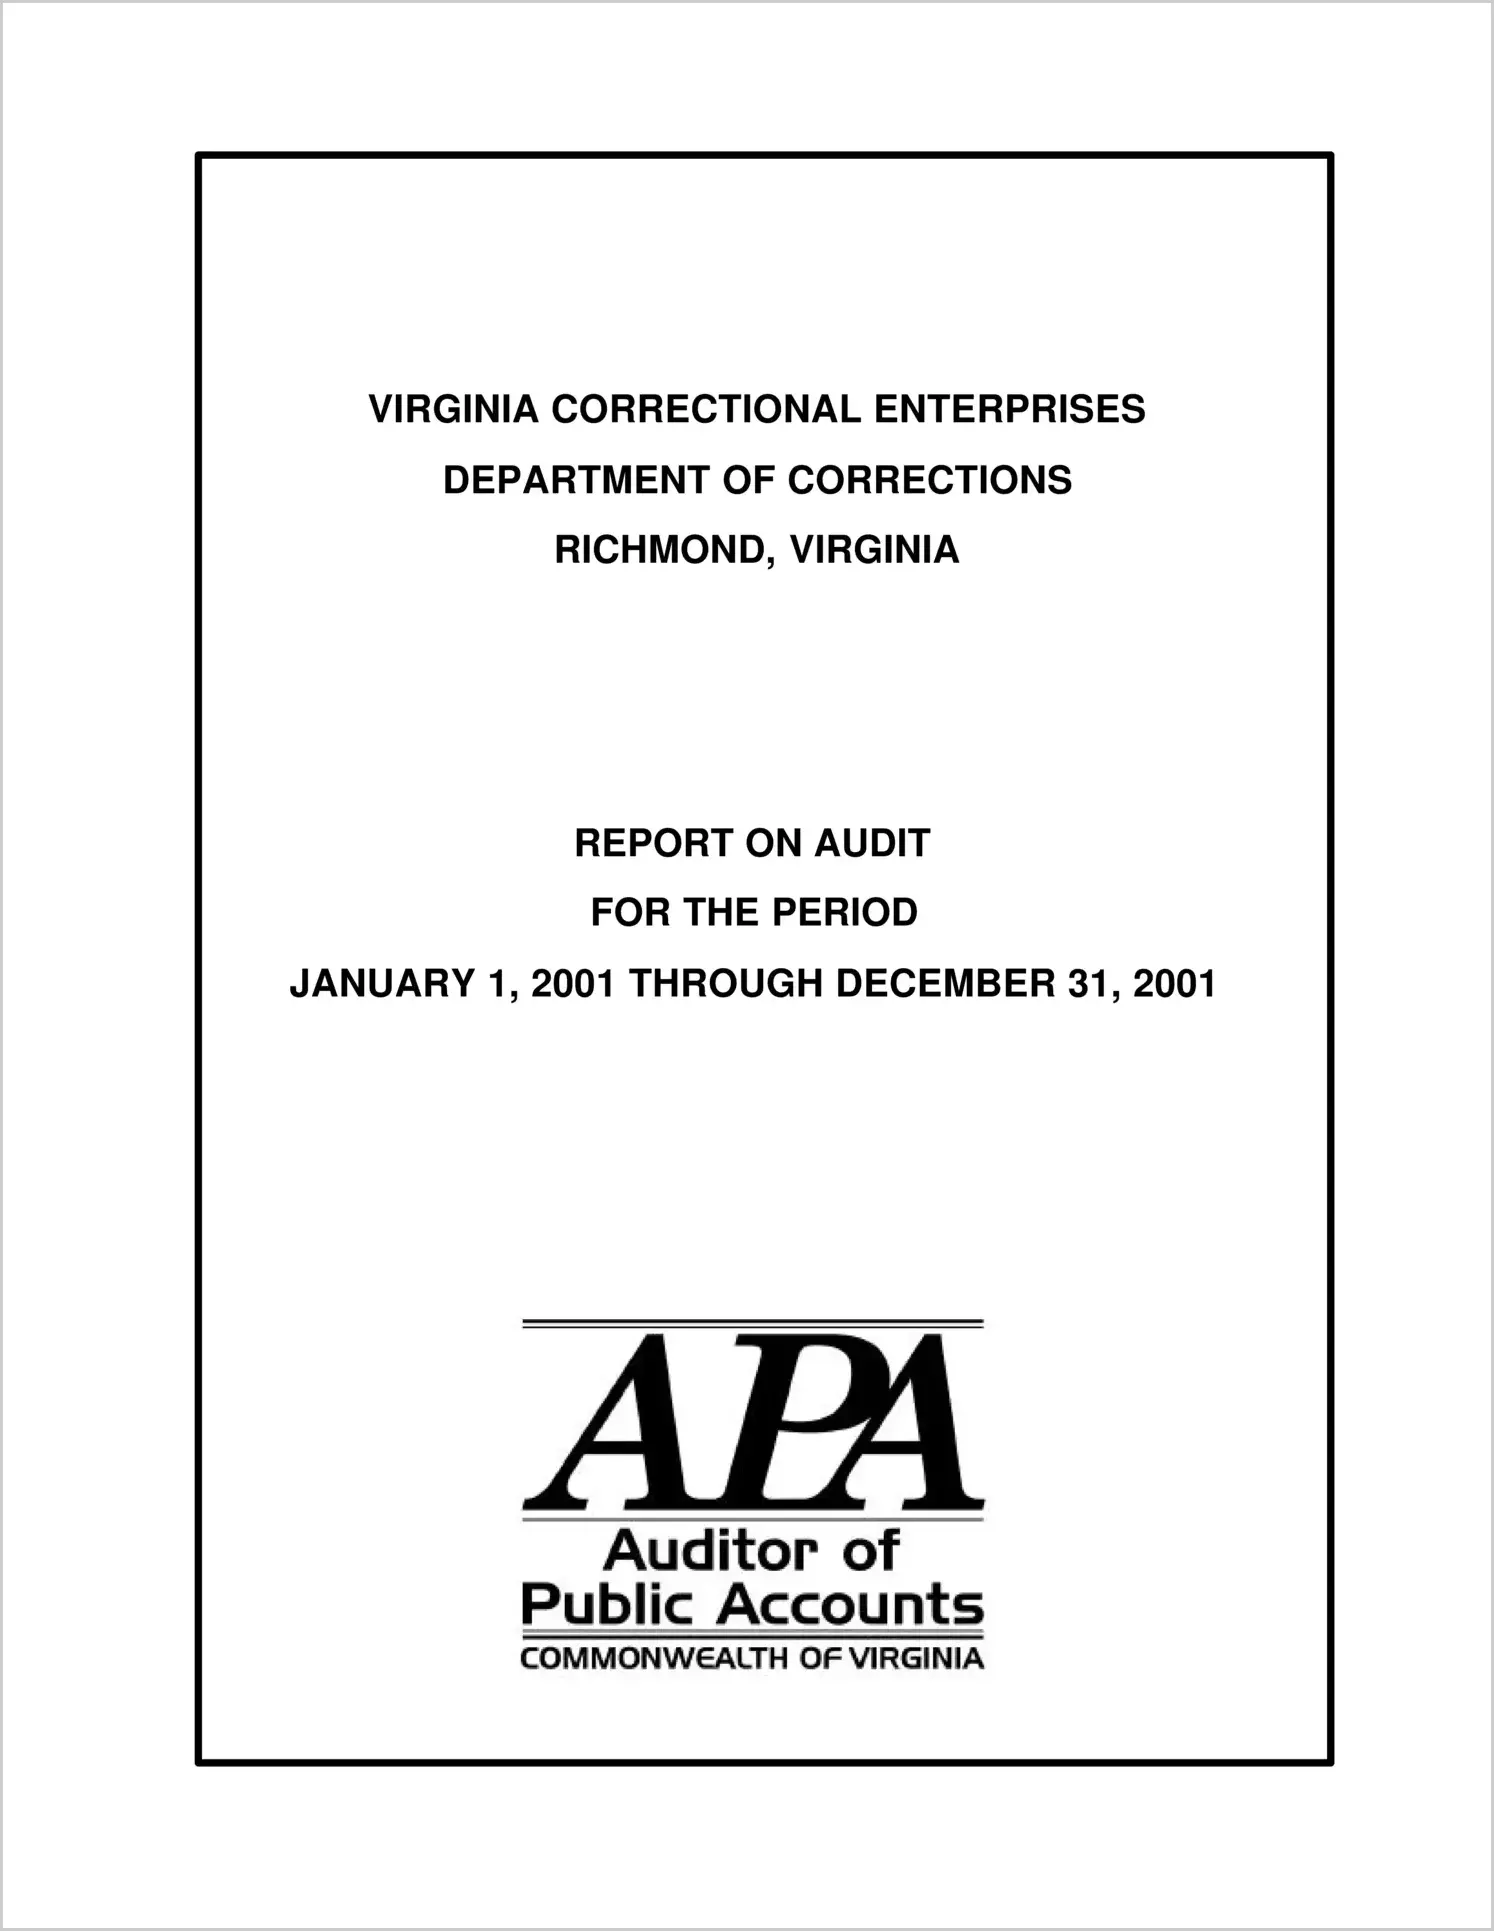 Virginia Correctional Enterprises for the period January 1, 2001 through December 31, 2001